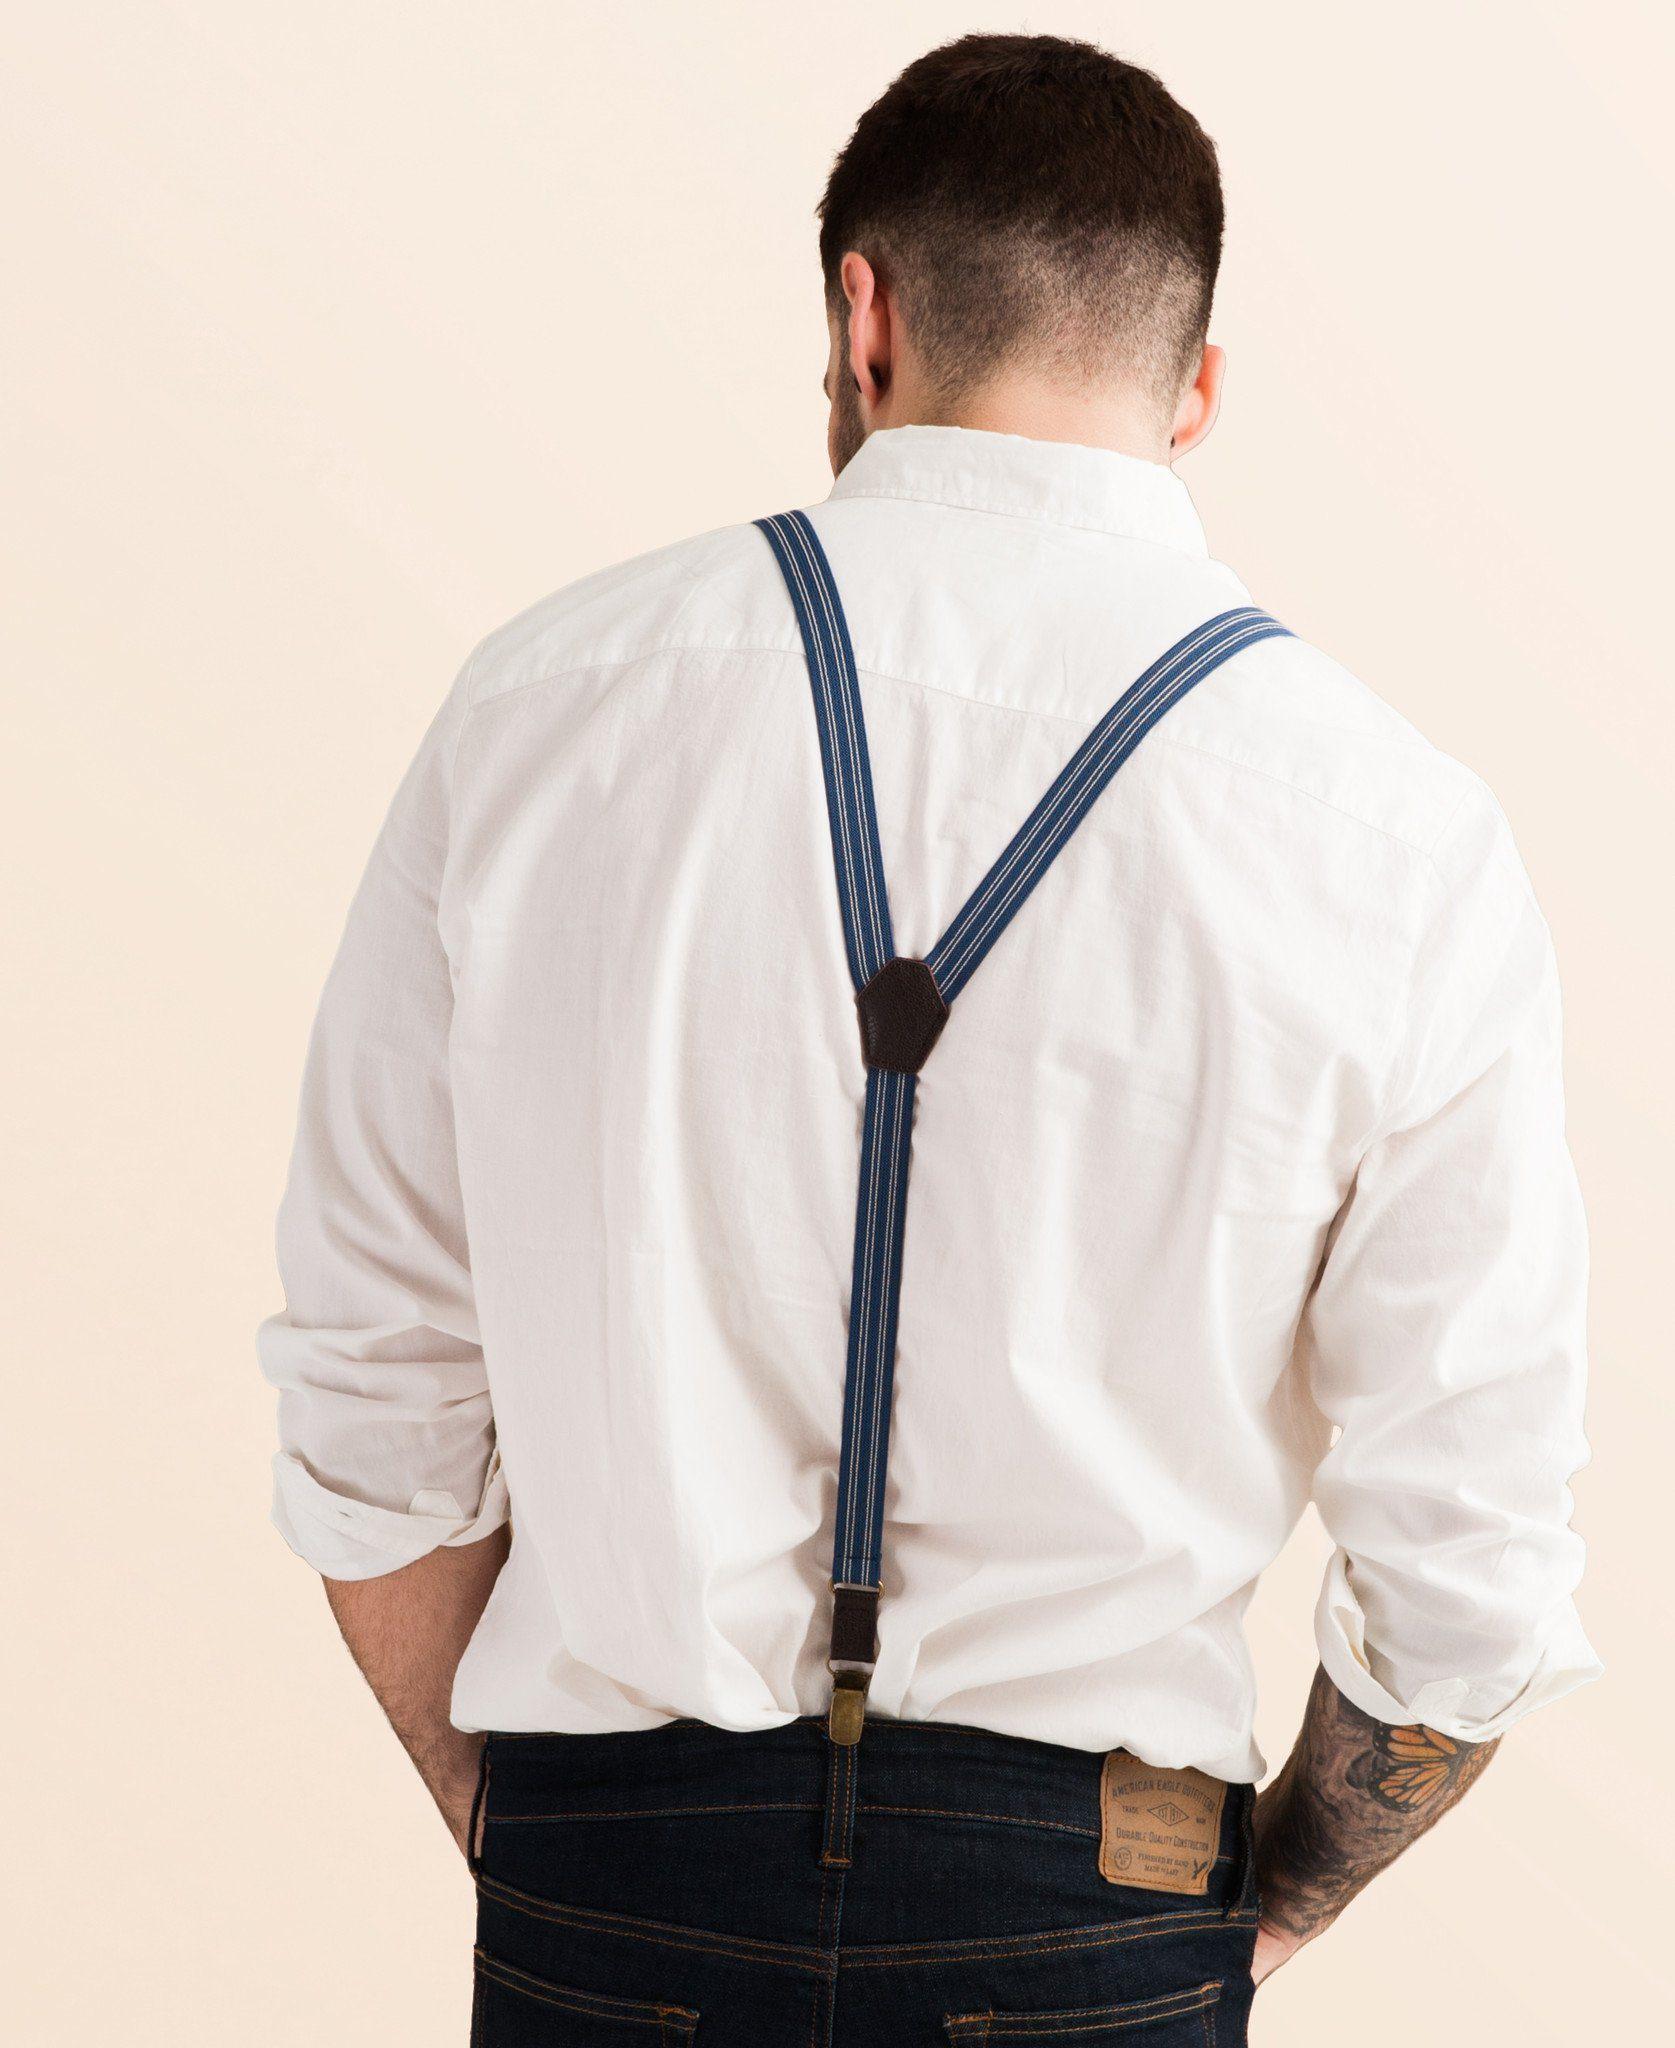 JJ Suspenders Scholar - Navy Blue Pin Striped Suspenders